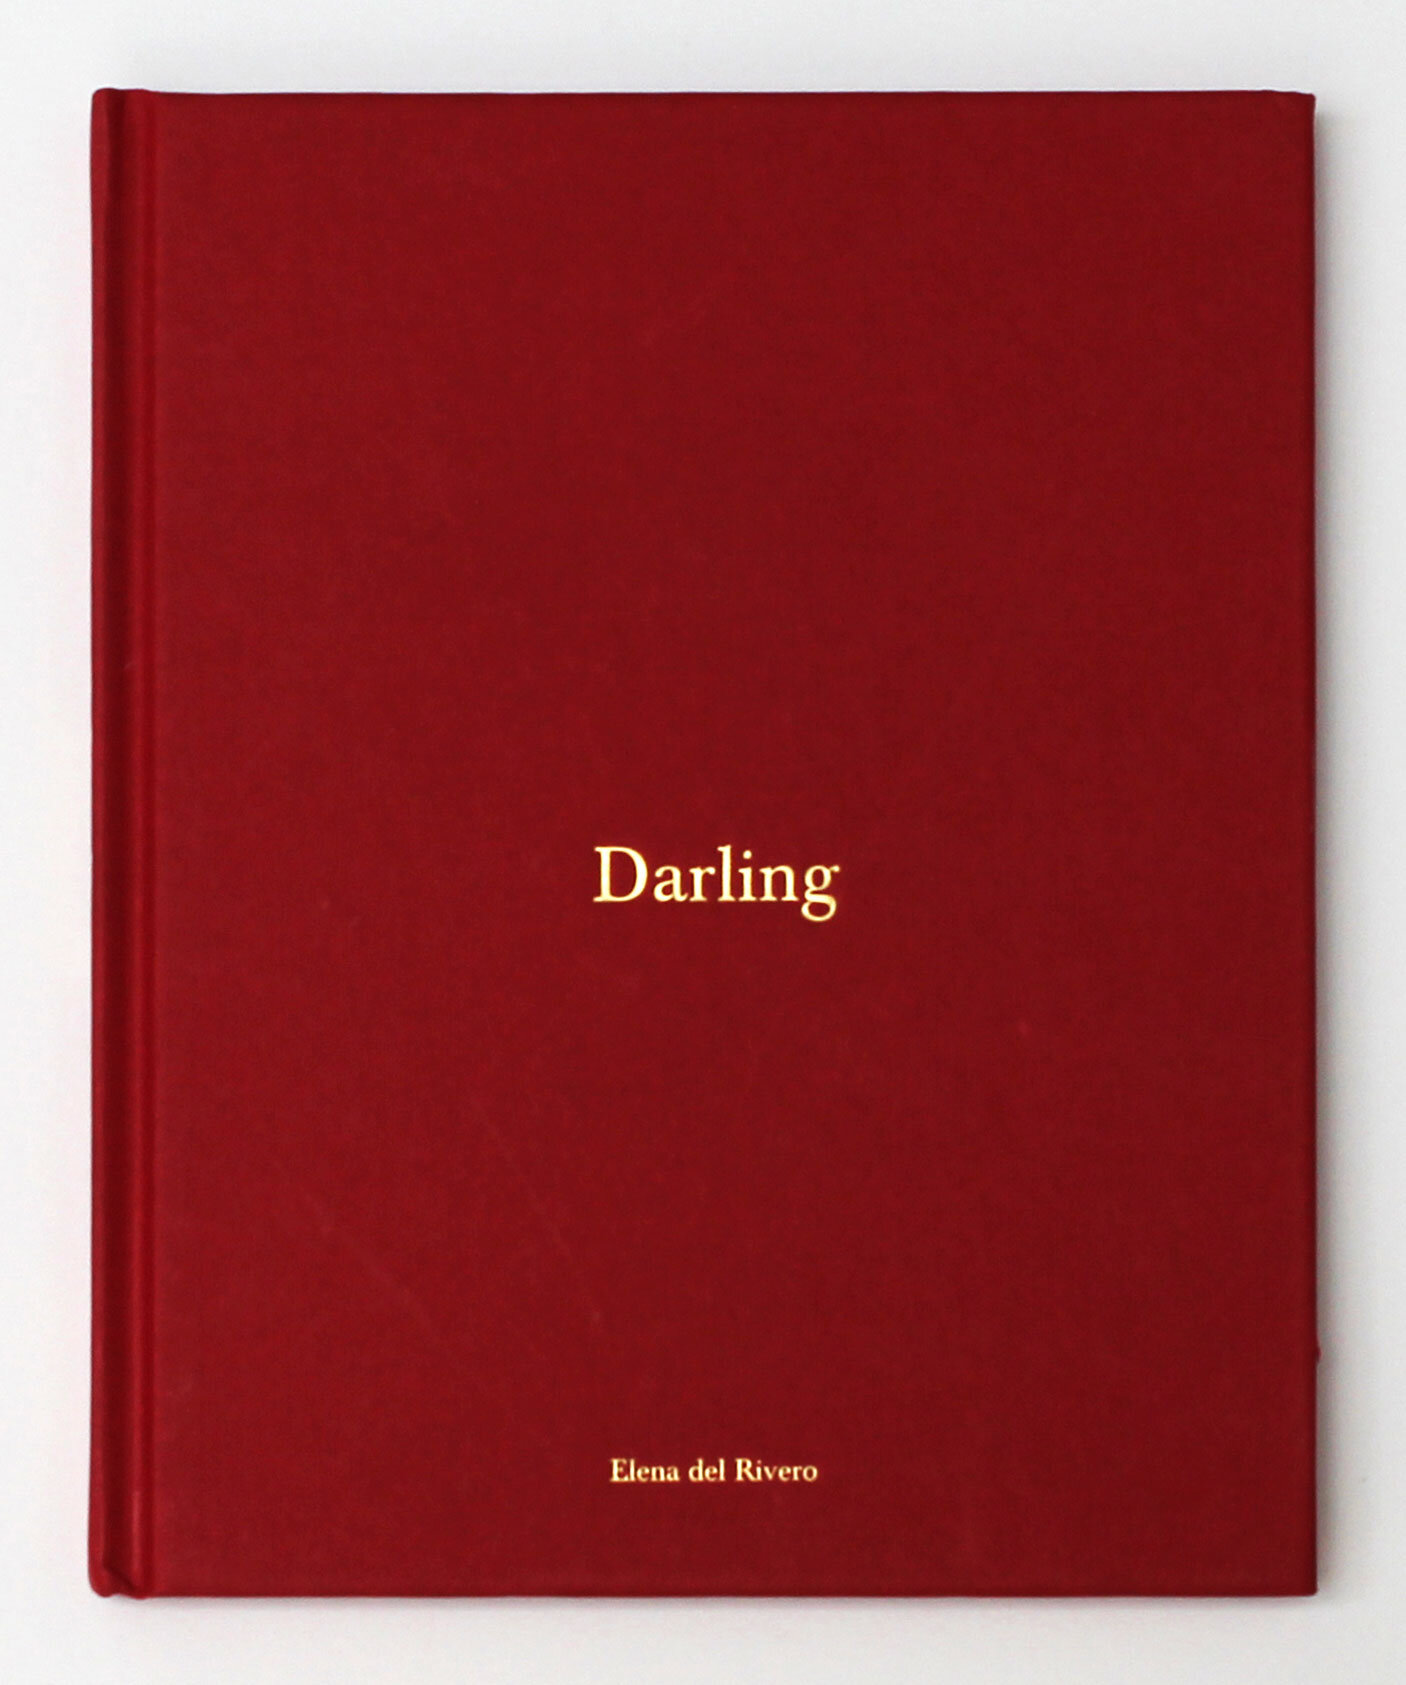  Darling, on Rembrandt, Exhibition catalog published by Galeria Elvira González, Madrid (2006) with essays by Elena del Rivero and Kara Vander Weg 